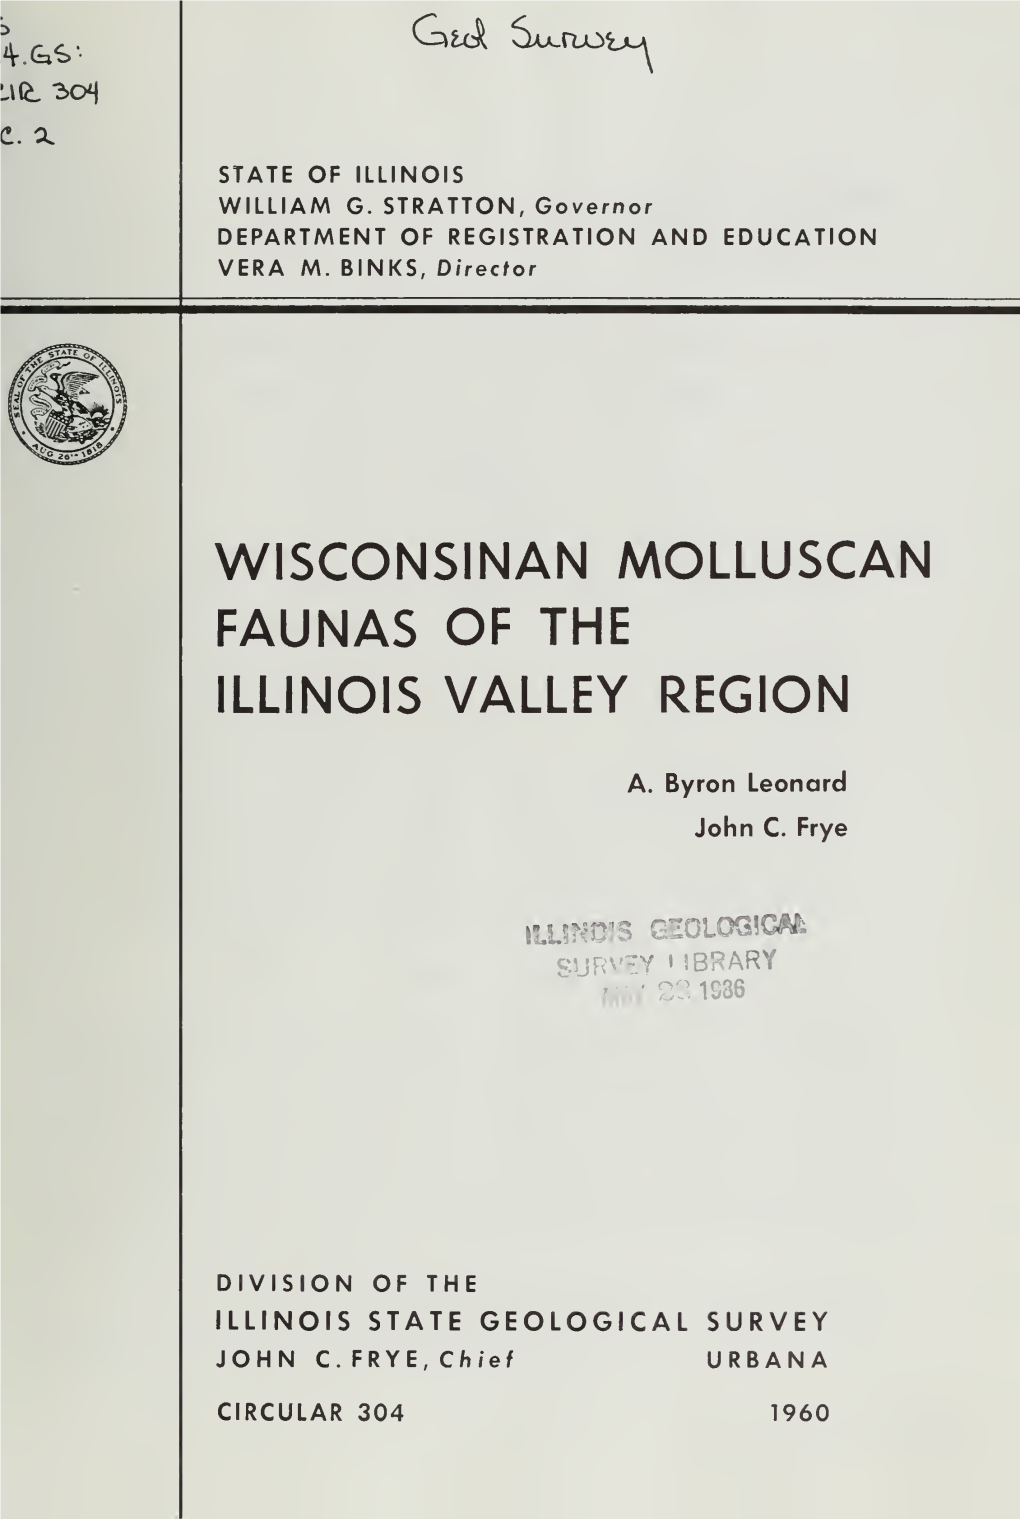 Wisconsinan Molluscan Faunas of the Illinois Valley Region